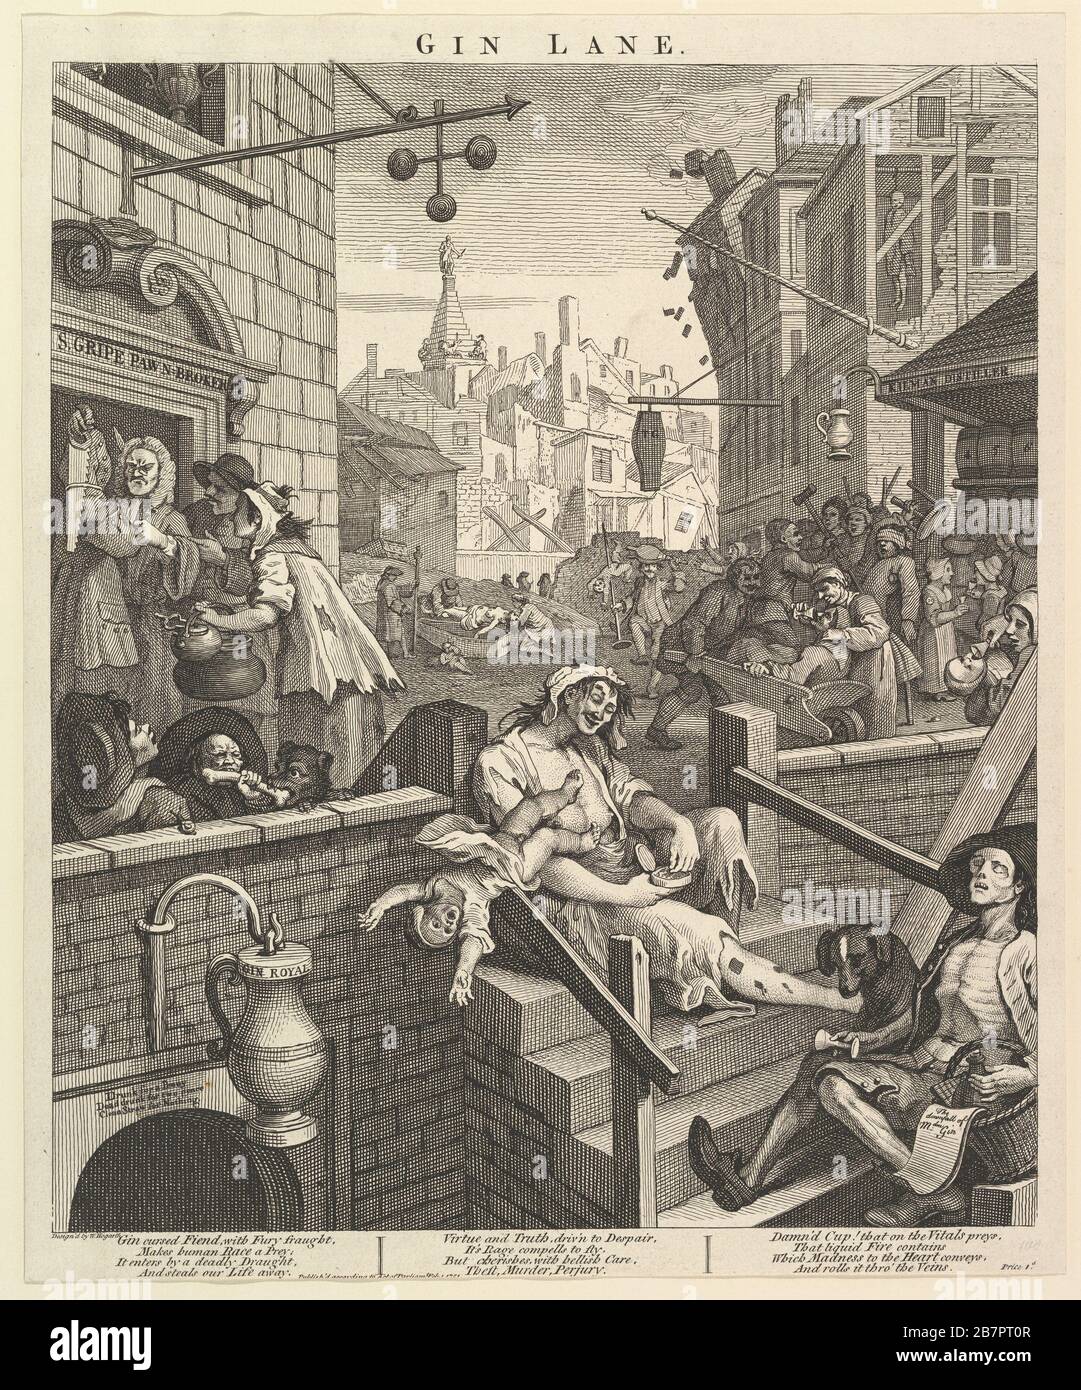 Gin Lane, February 1, 1751. Stock Photo